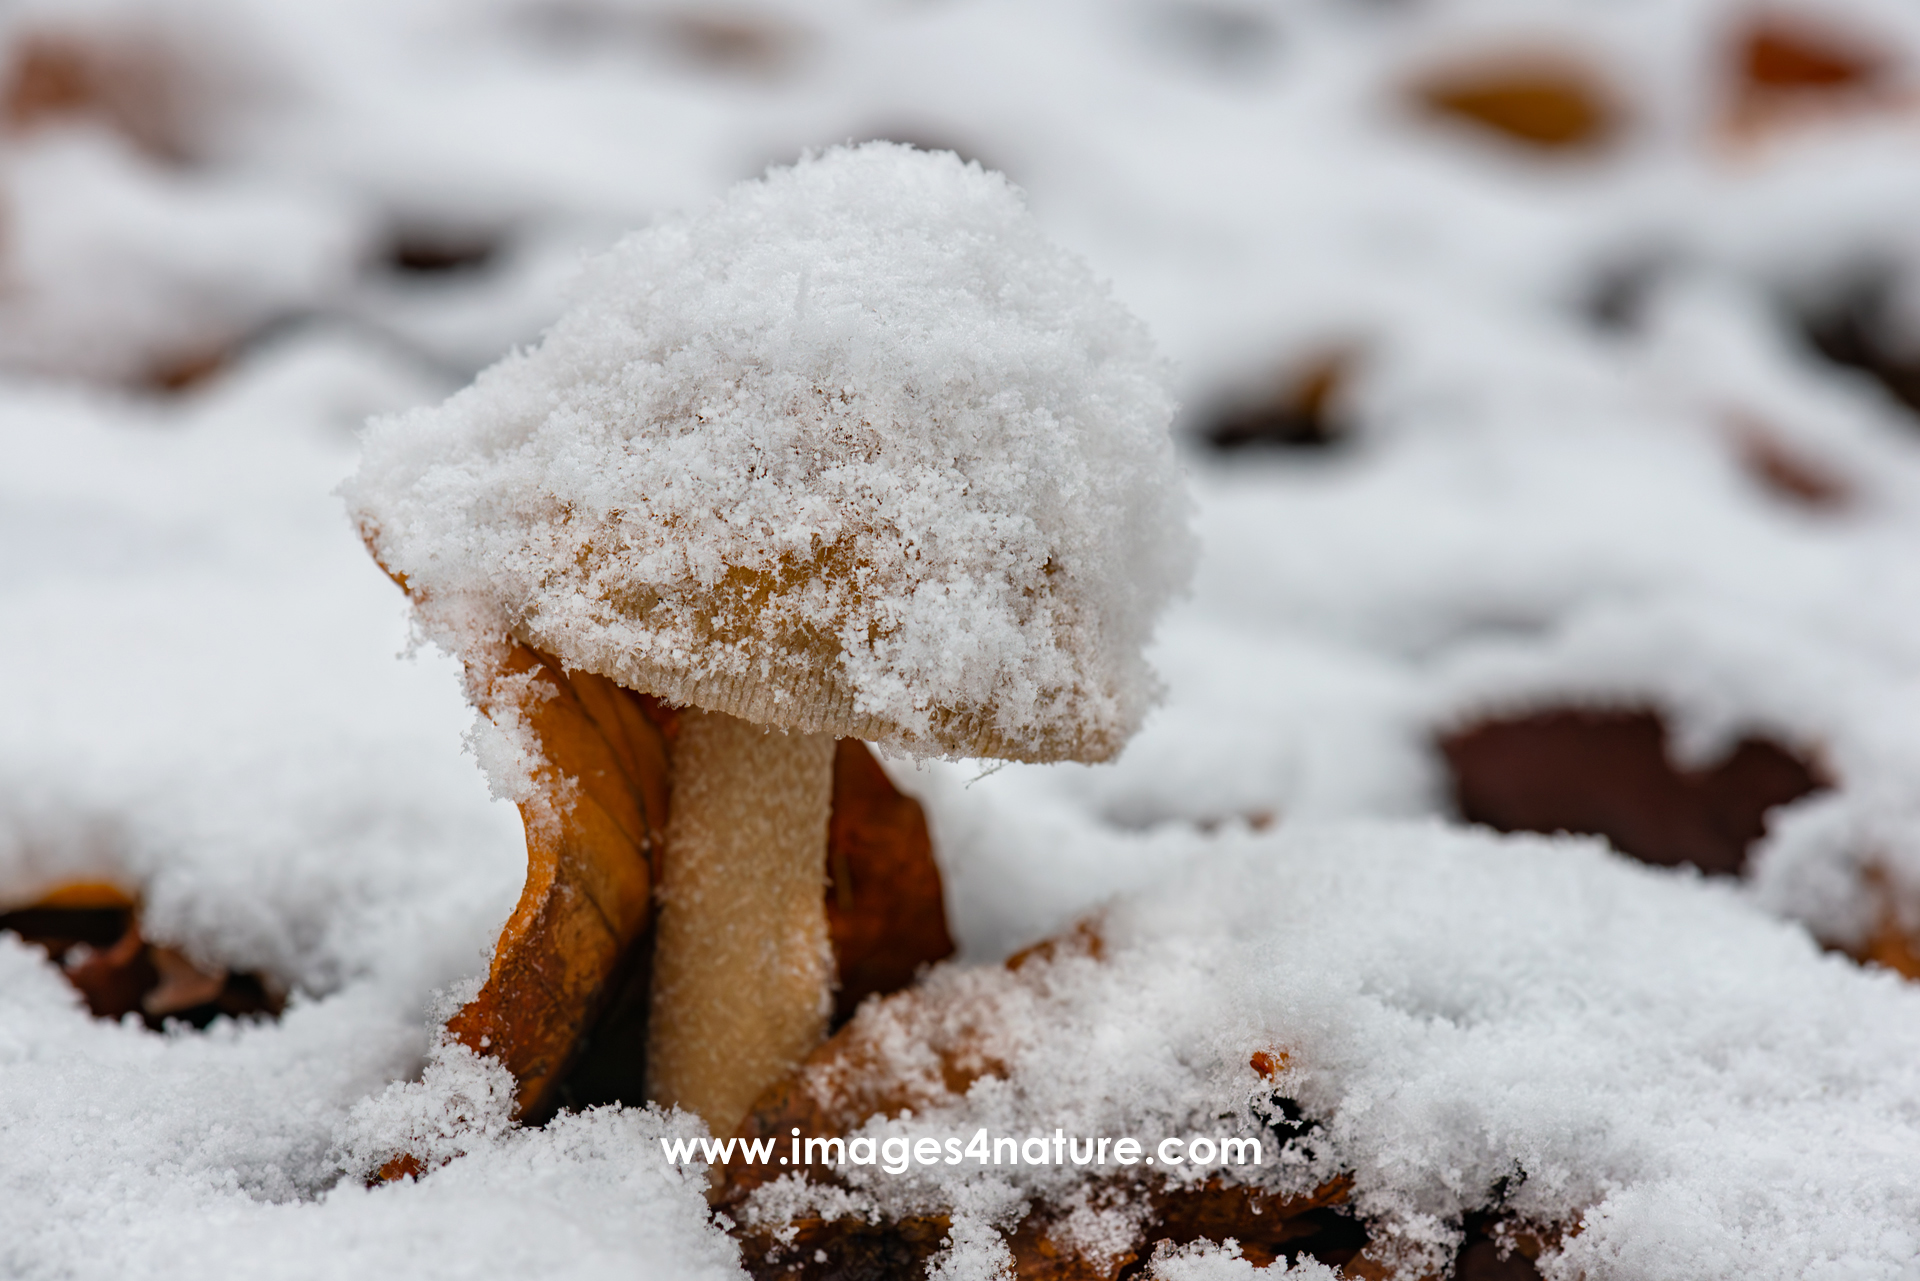 Brown autumn leaf leaning on snow covered beige mushroom